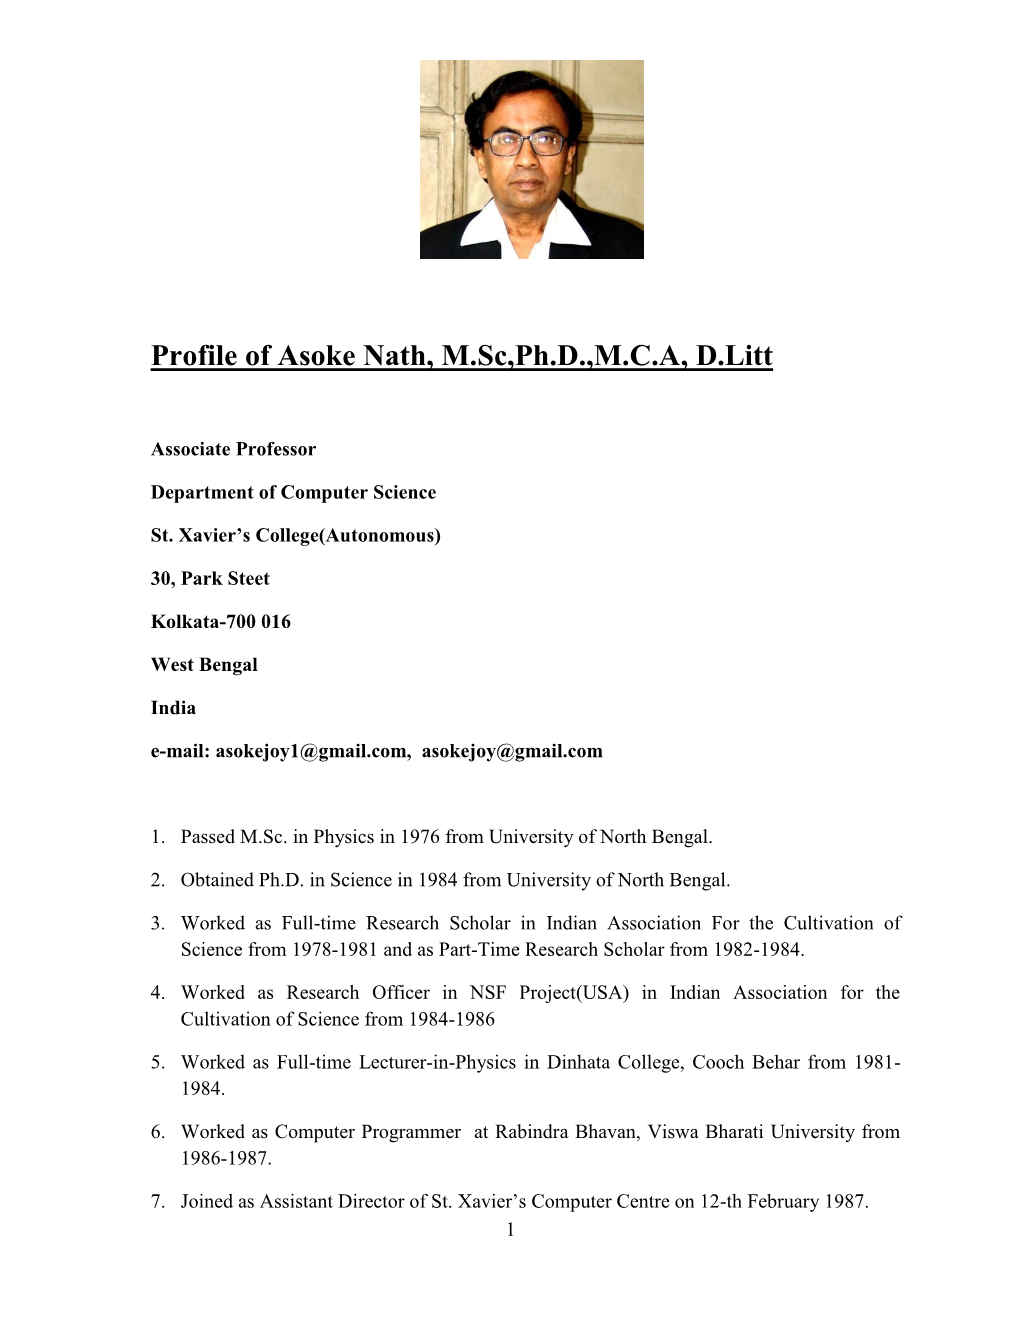 Profile of Asoke Nath, M.Sc,Ph.D.,M.C.A, D.Litt